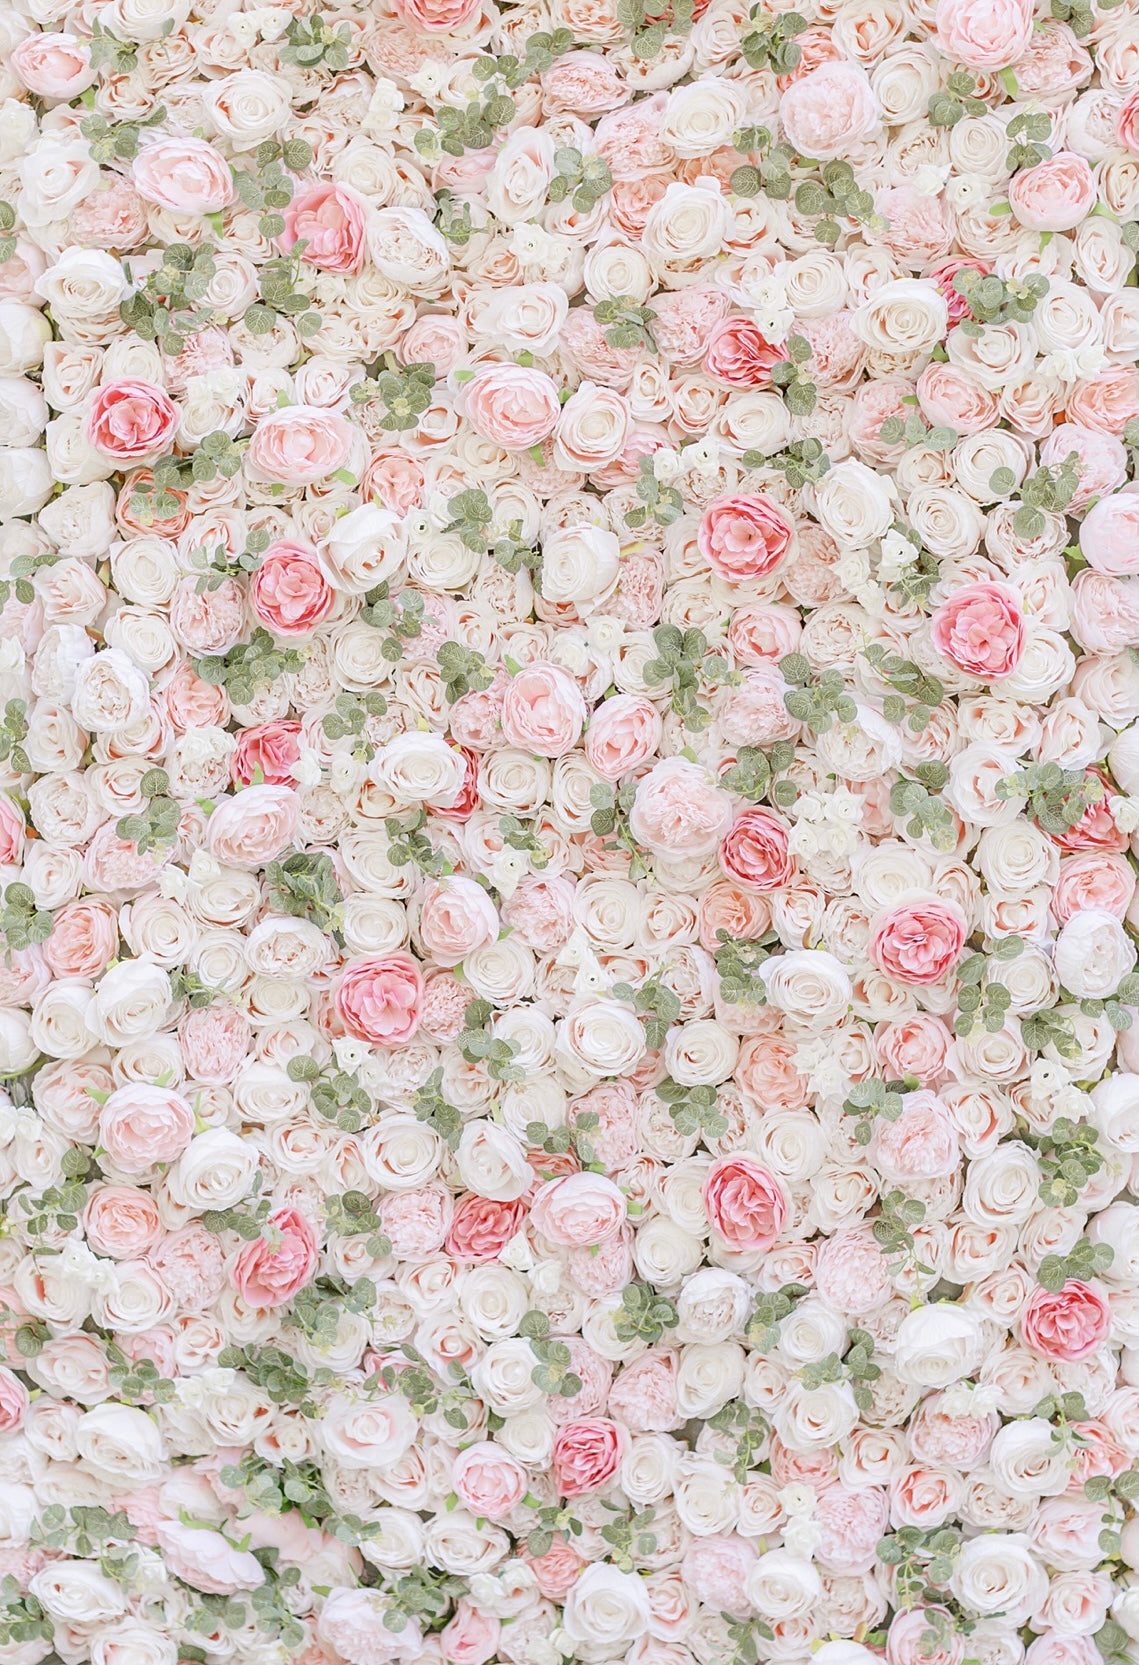 Flower Wall - Rosa (4x8)